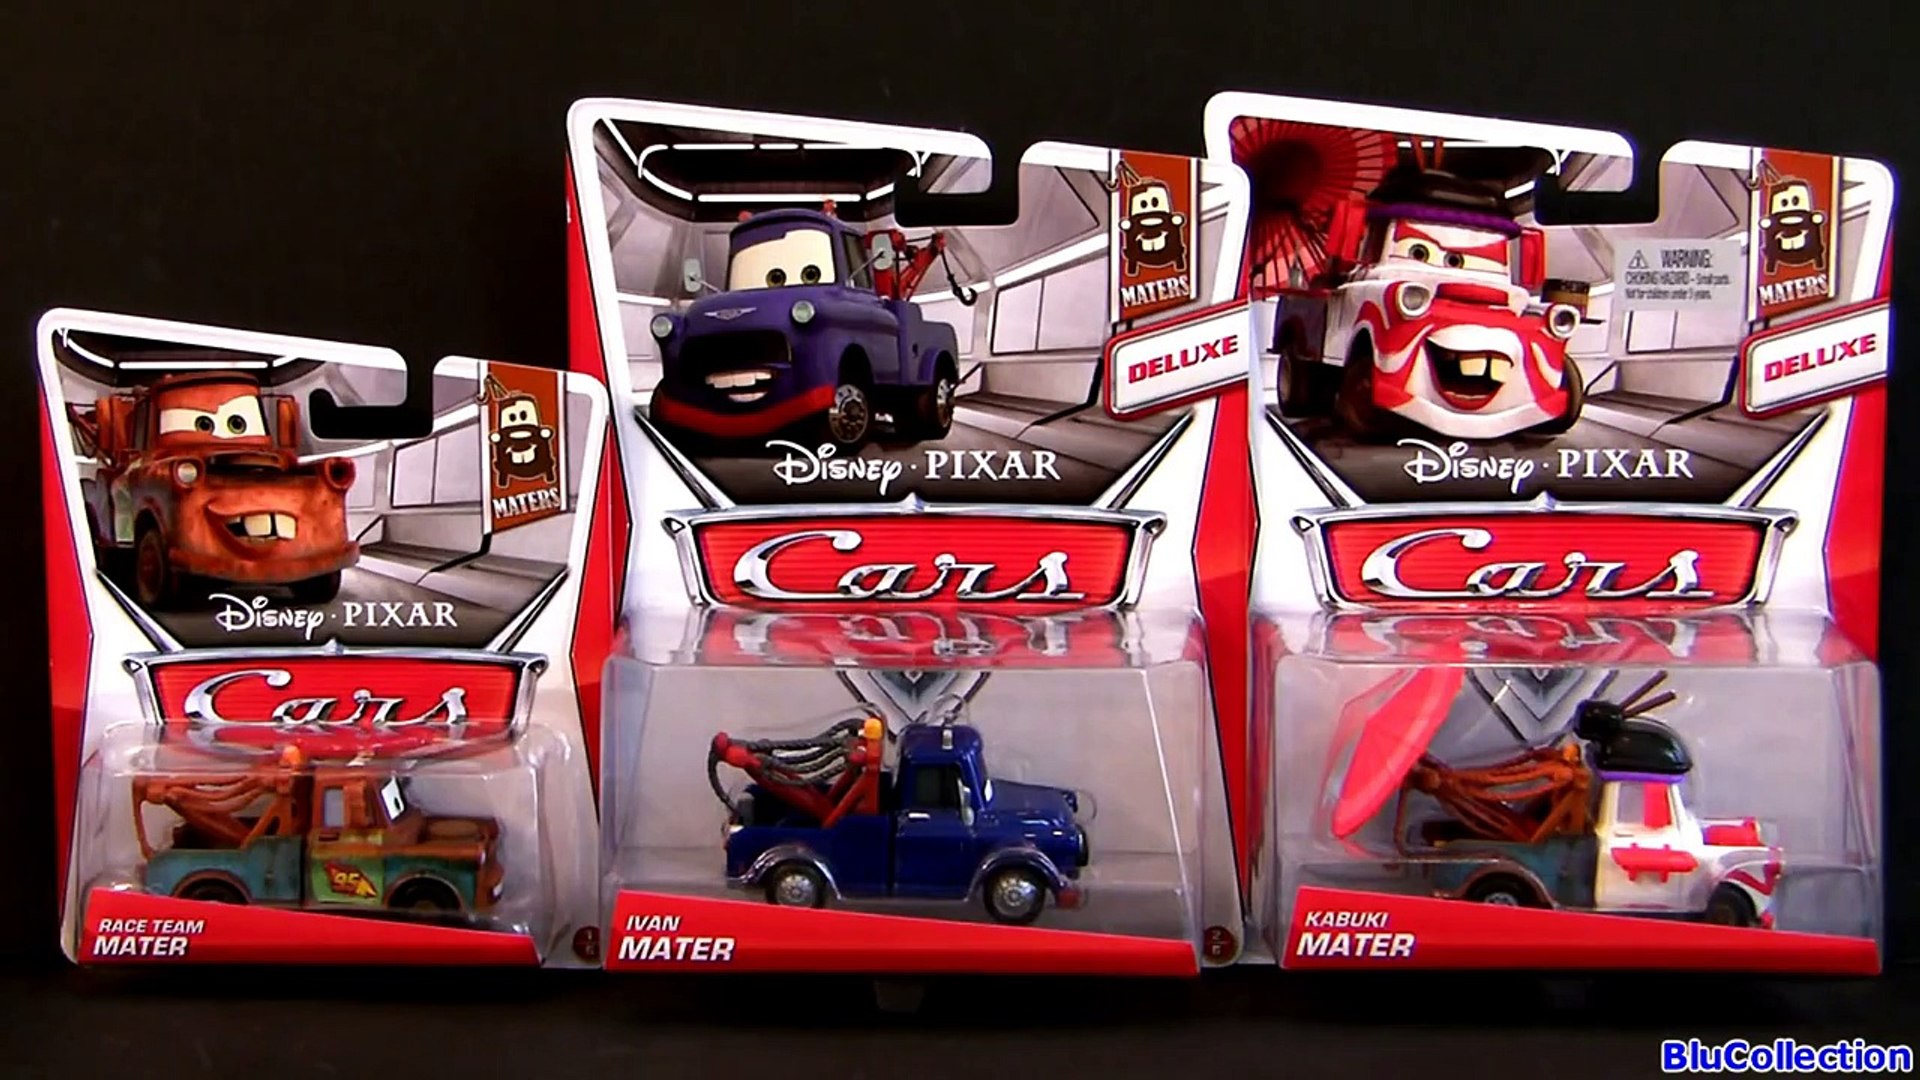 Ivan Mater Cars 2 Kabuki Mater From MATERS Deluxe Edition Diecast 2013  Disney Pixar Mattel cartoys - video Dailymotion